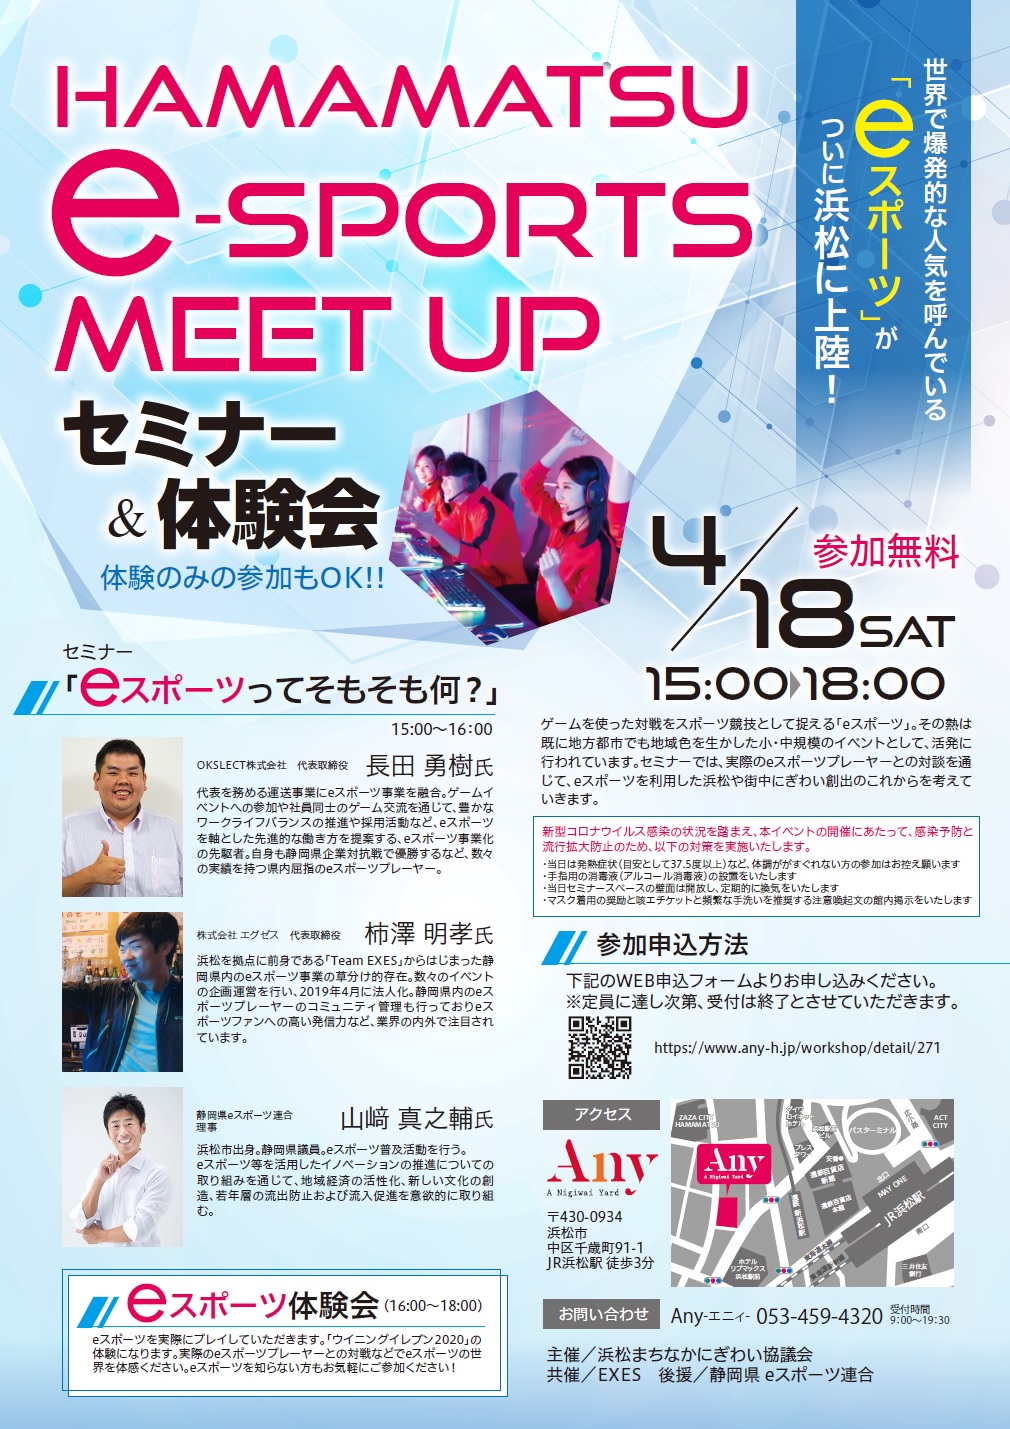 『HAMAMATSU -Sports meet up』イースポーツ セミナー＆体験会